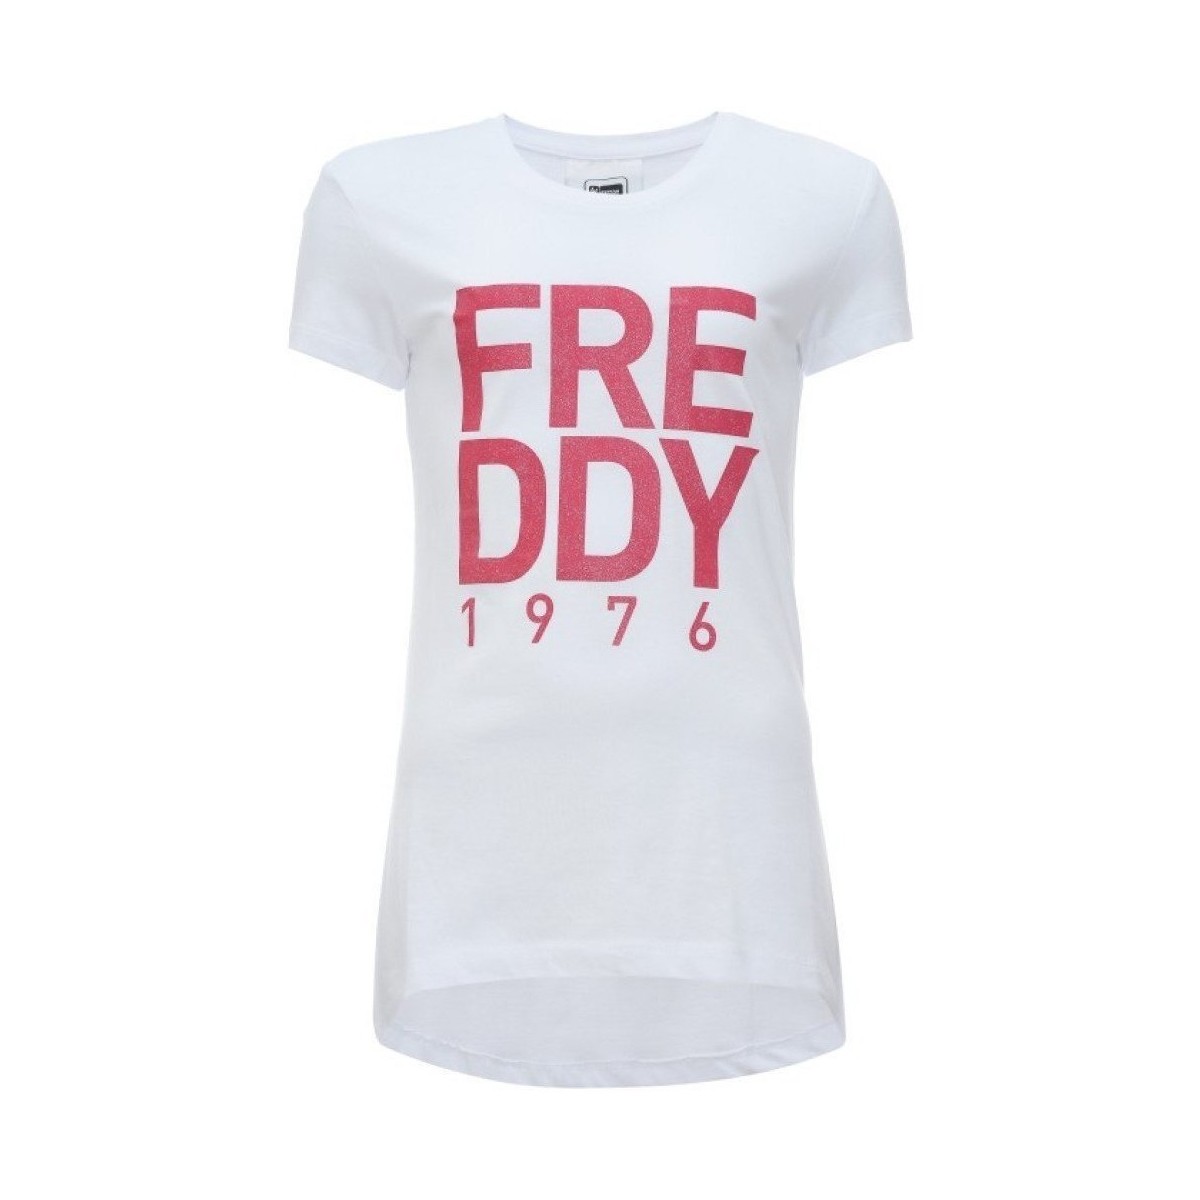 Abbigliamento Unisex bambino T-shirt maniche corte Freddy T-Shirt Bambina Scritta Glitter Bianco